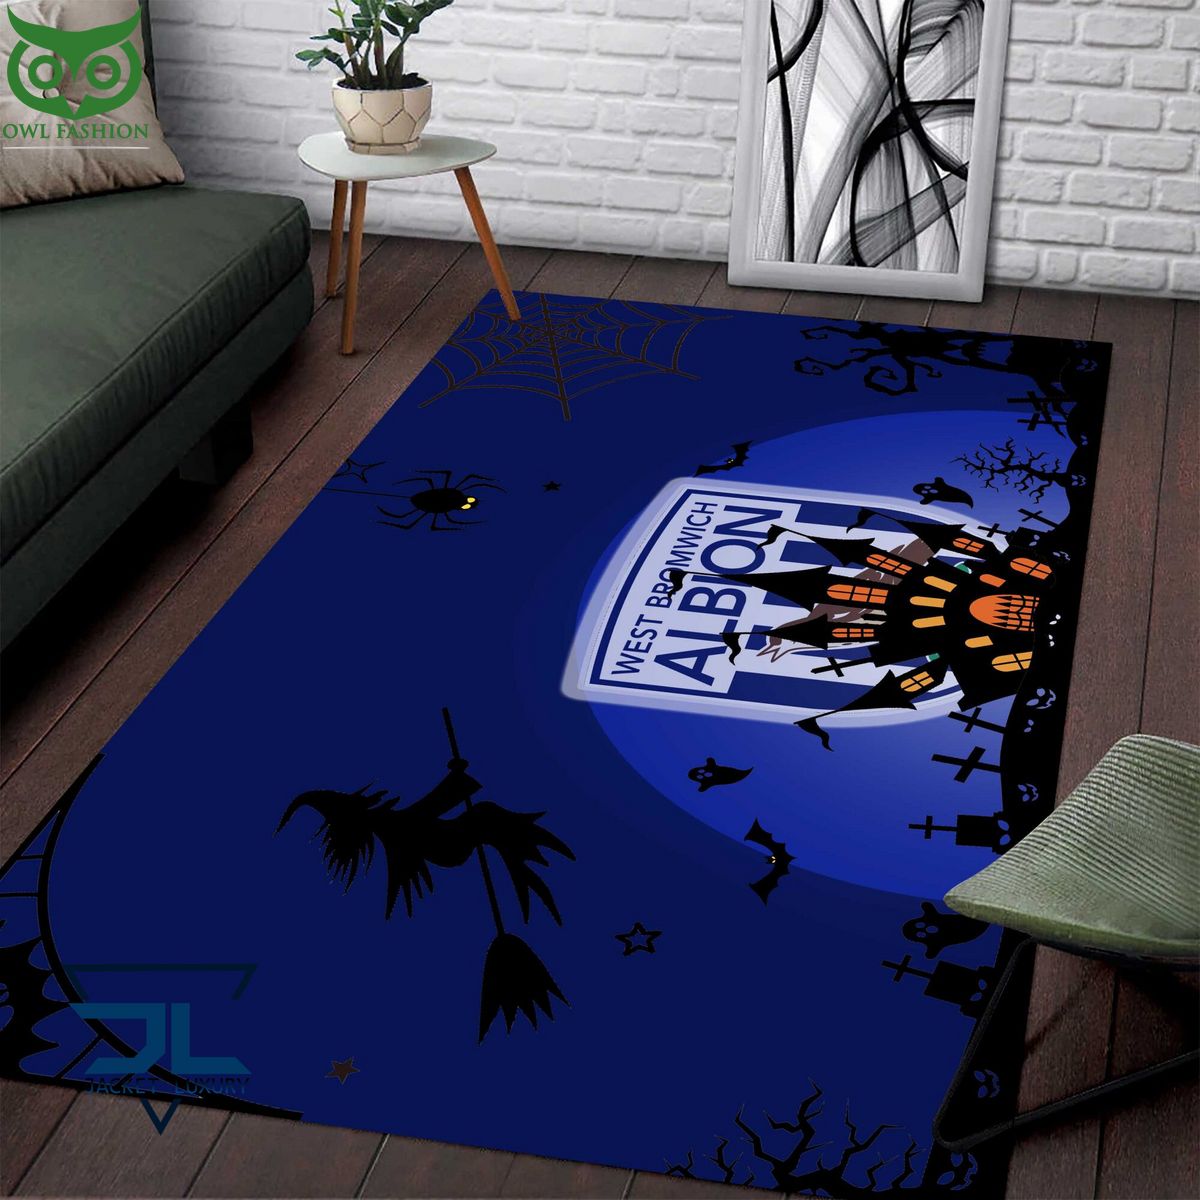 West Bromwich Albion F.C EFL New Carpet Rug